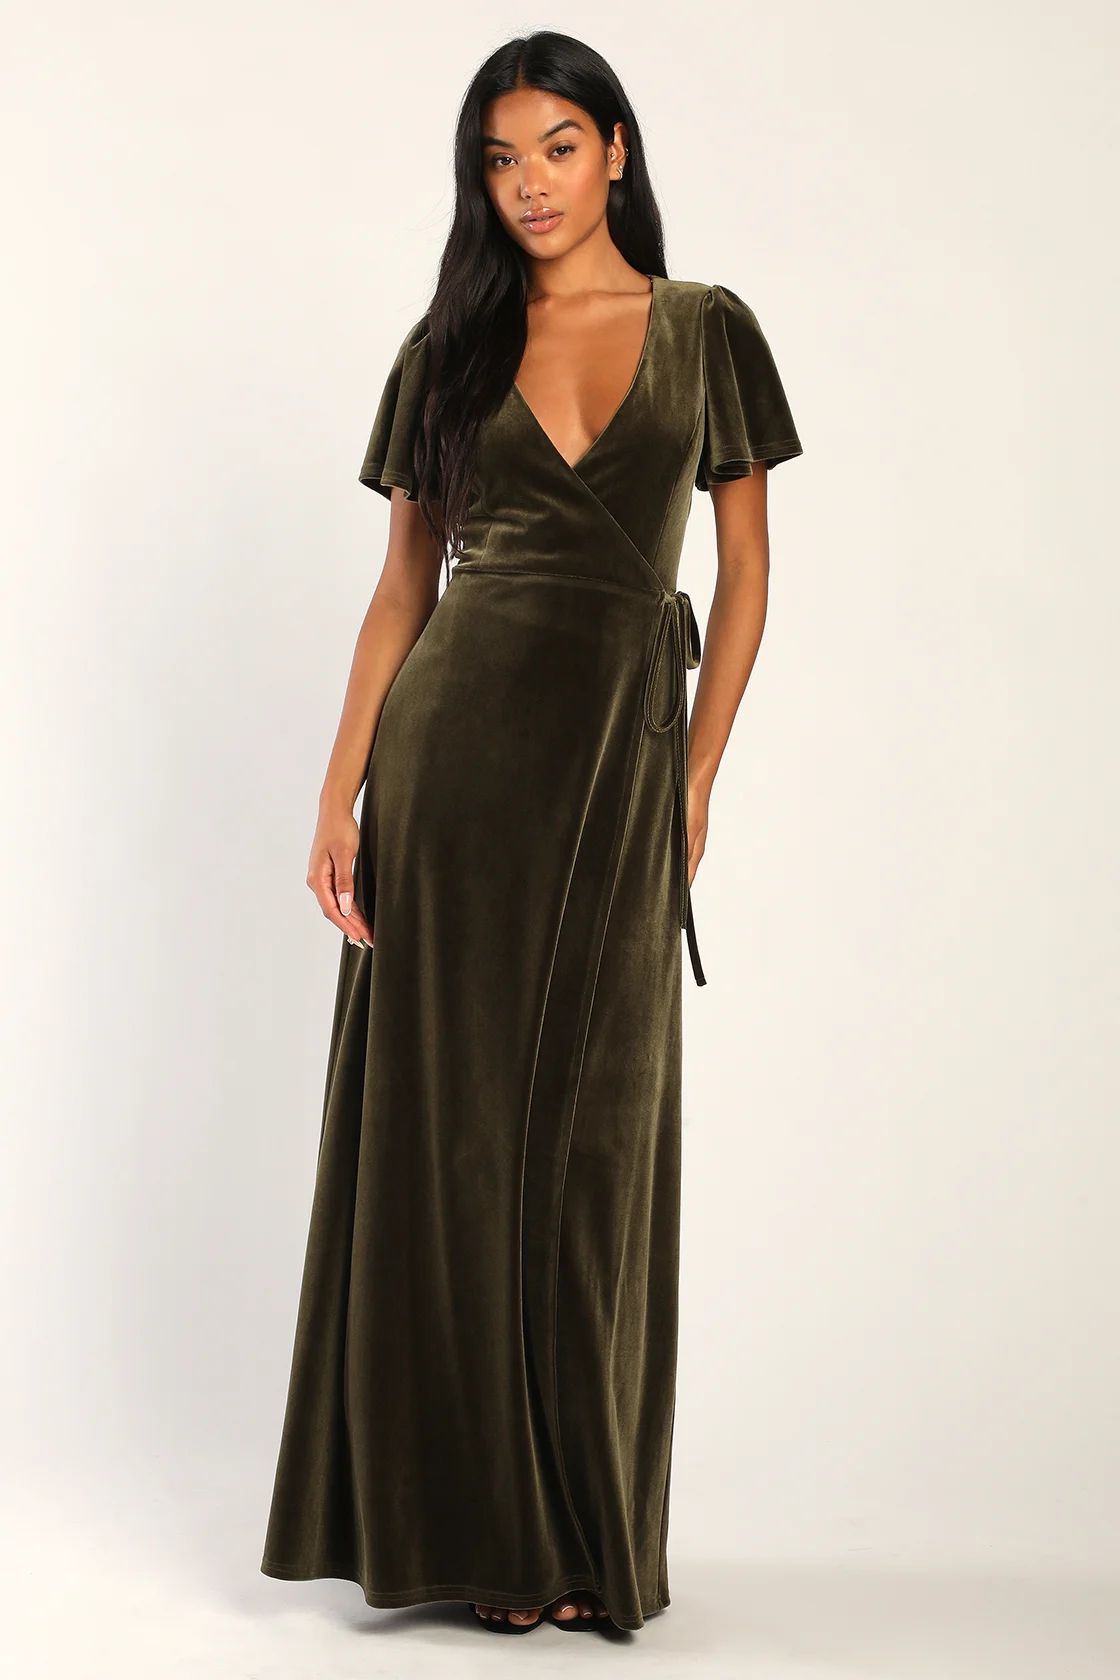 Memorable Romance Olive Green Velvet Maxi Wrap Dress | Lulus (US)